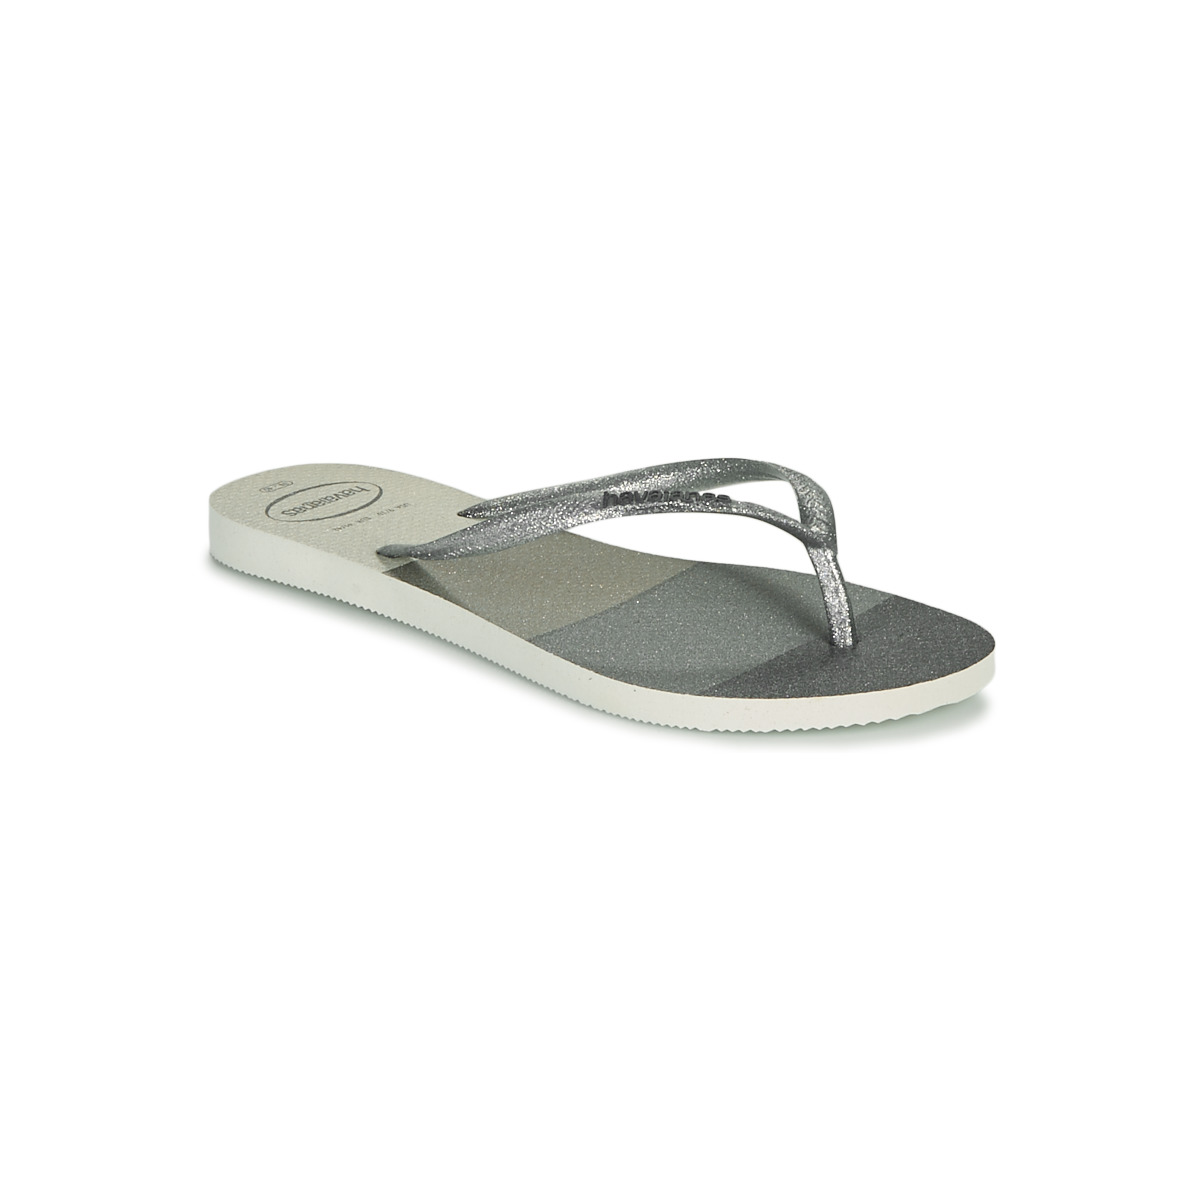 havaianas  slim palette glow  women's flip flops / sandals (shoes) in white